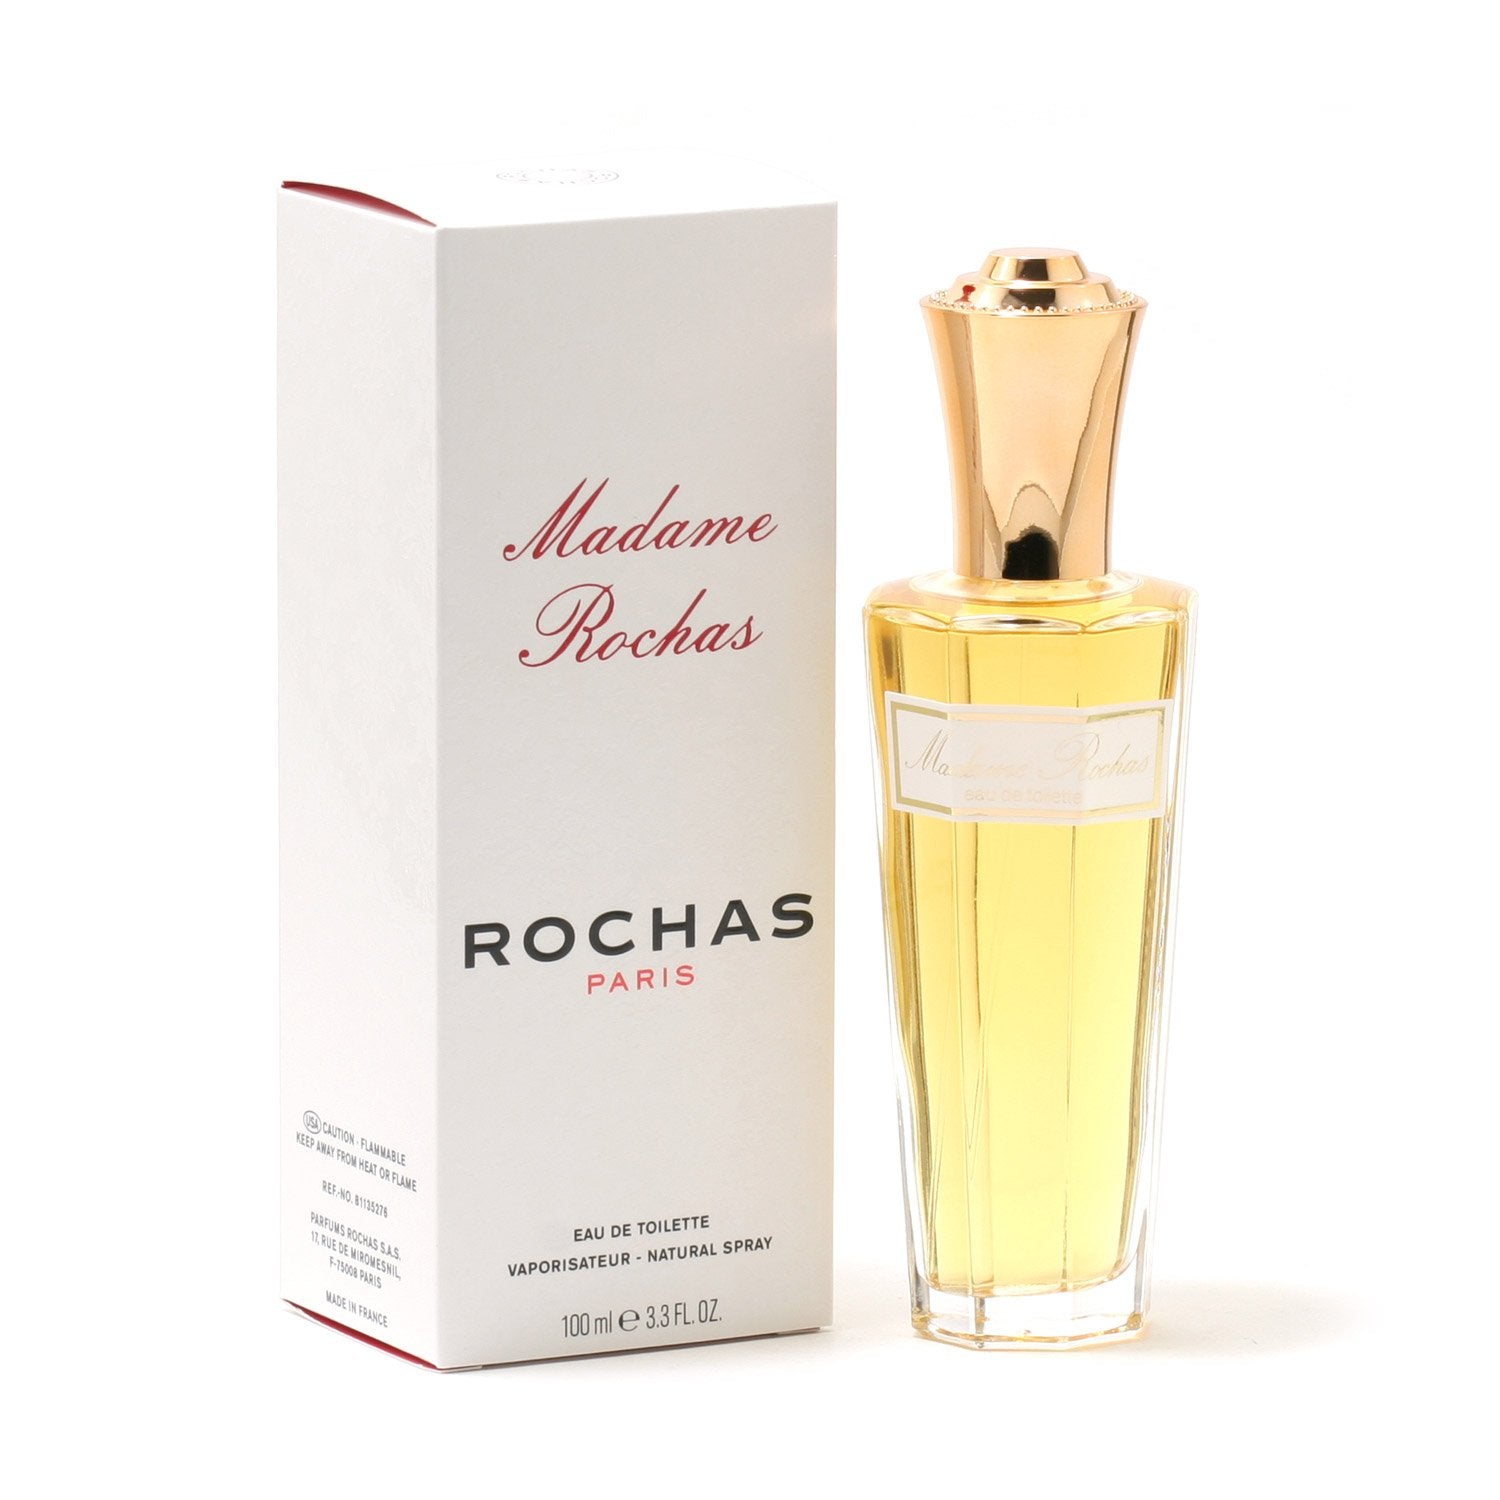 Perfume - MADAME ROCHAS FOR WOMEN BY ROCHAS - EAU DE TOILETTE SPRAY, 3.3 OZ